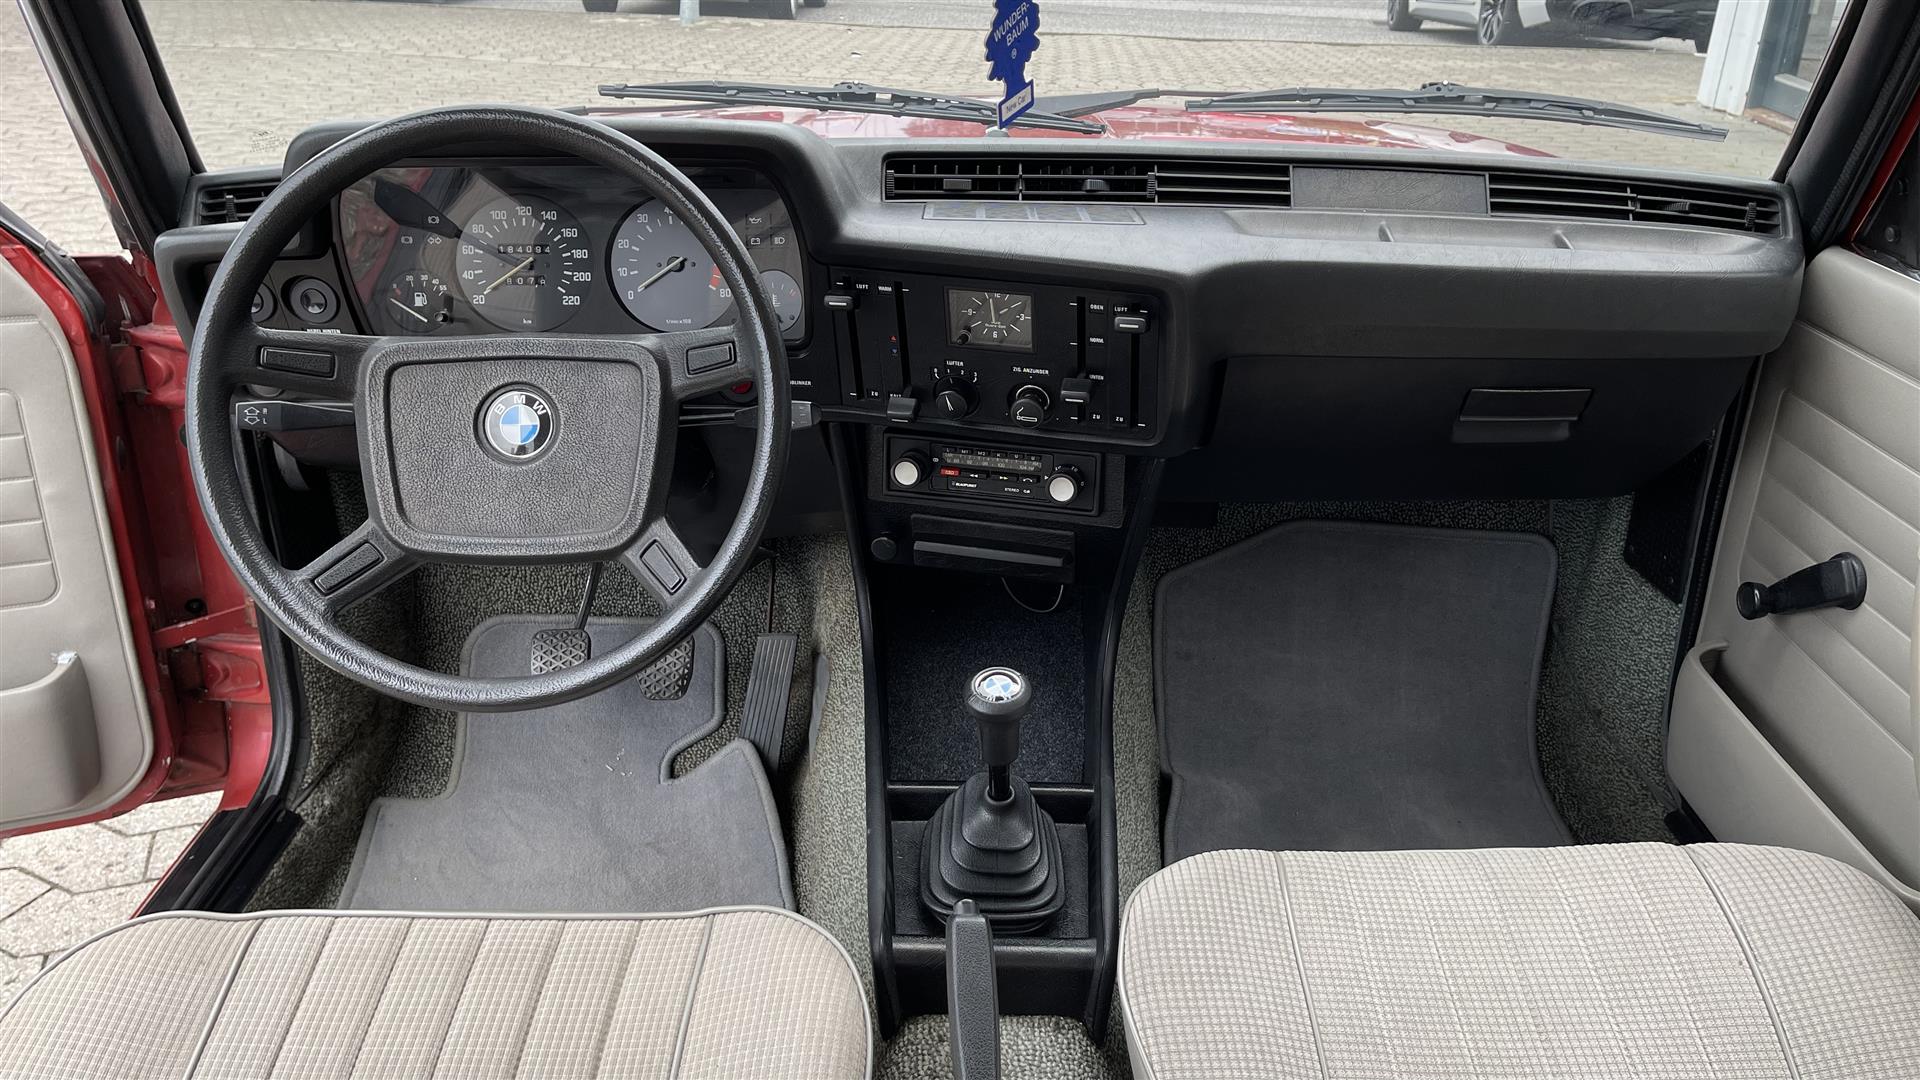 BMW 320 1978